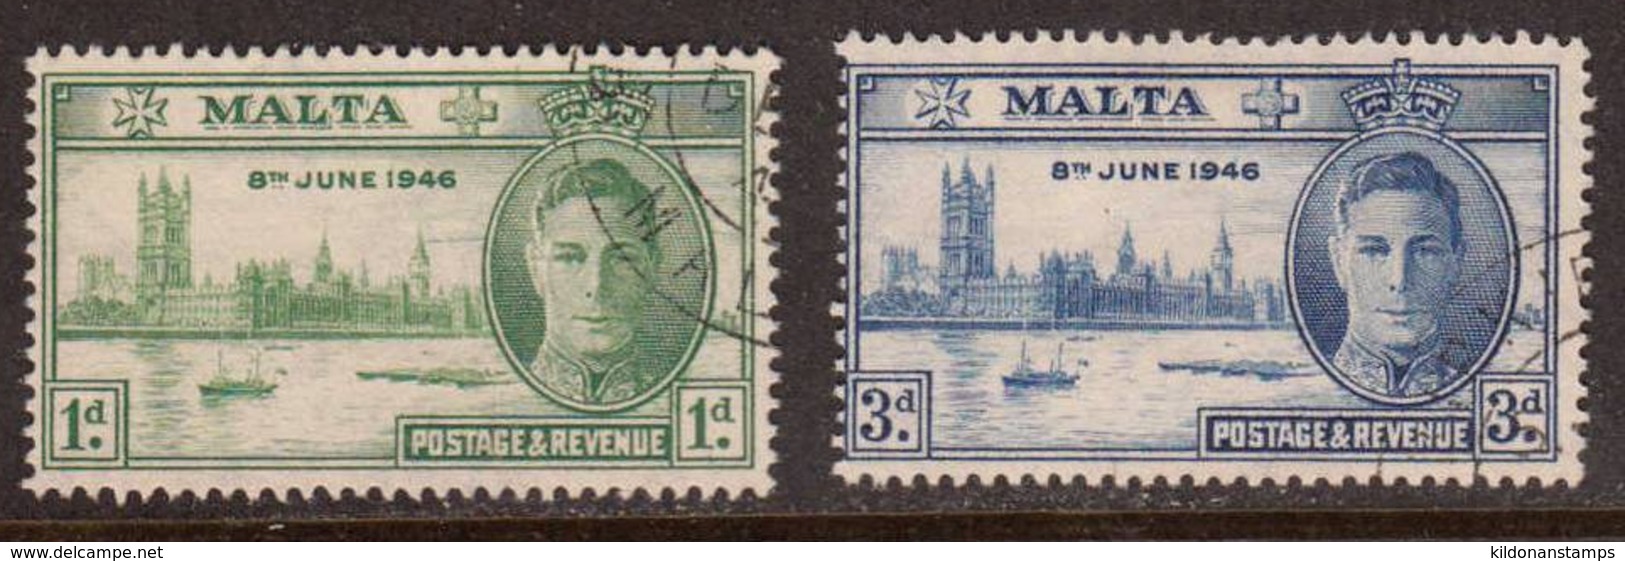 Malta 1946 Peace Issue, Used, Sc# 206-207, SG 232-233 - Malta